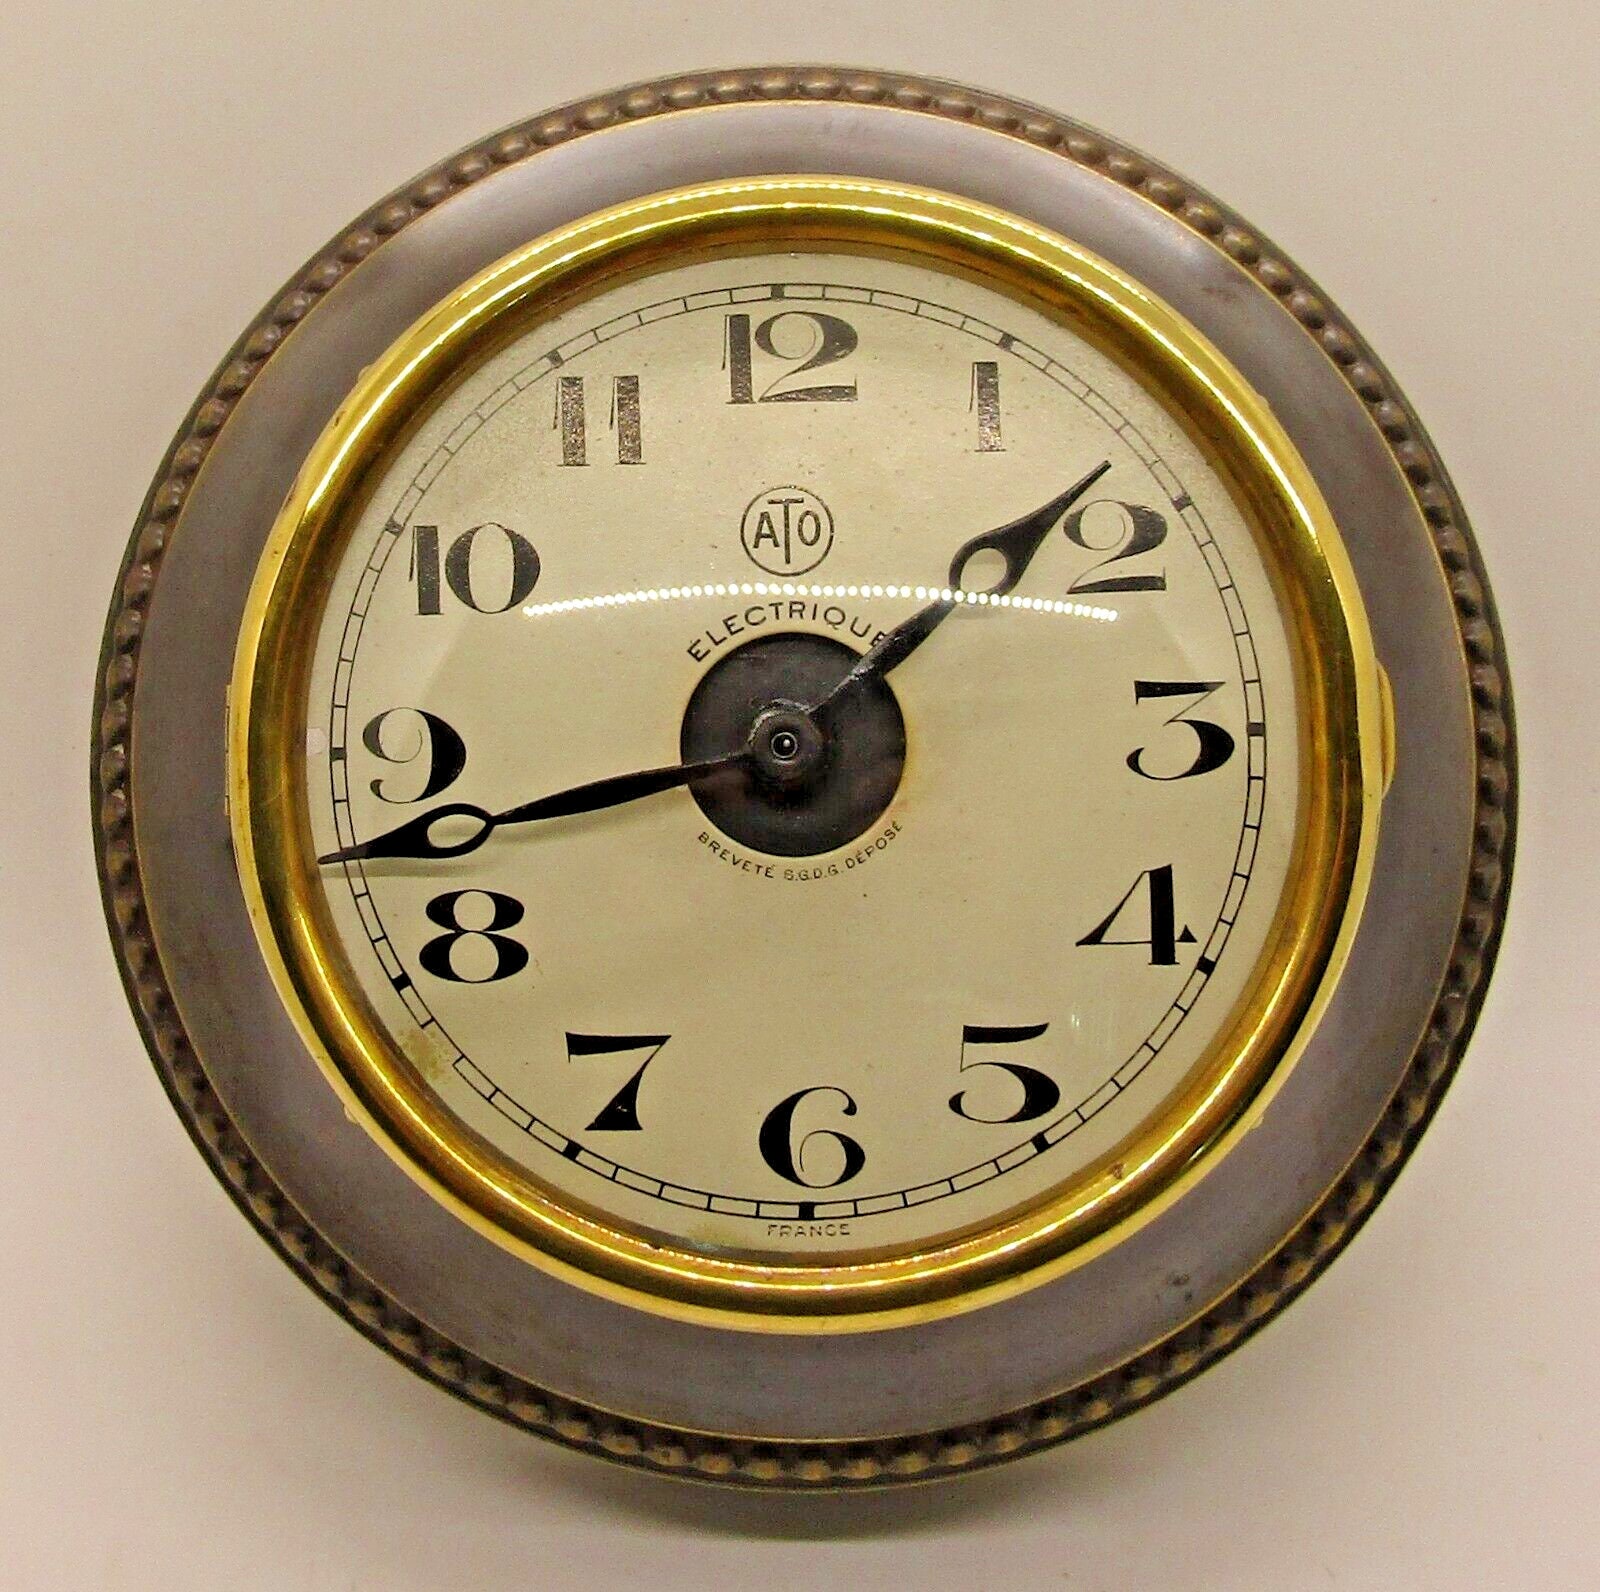 Pewter Gear Clock – English Elm